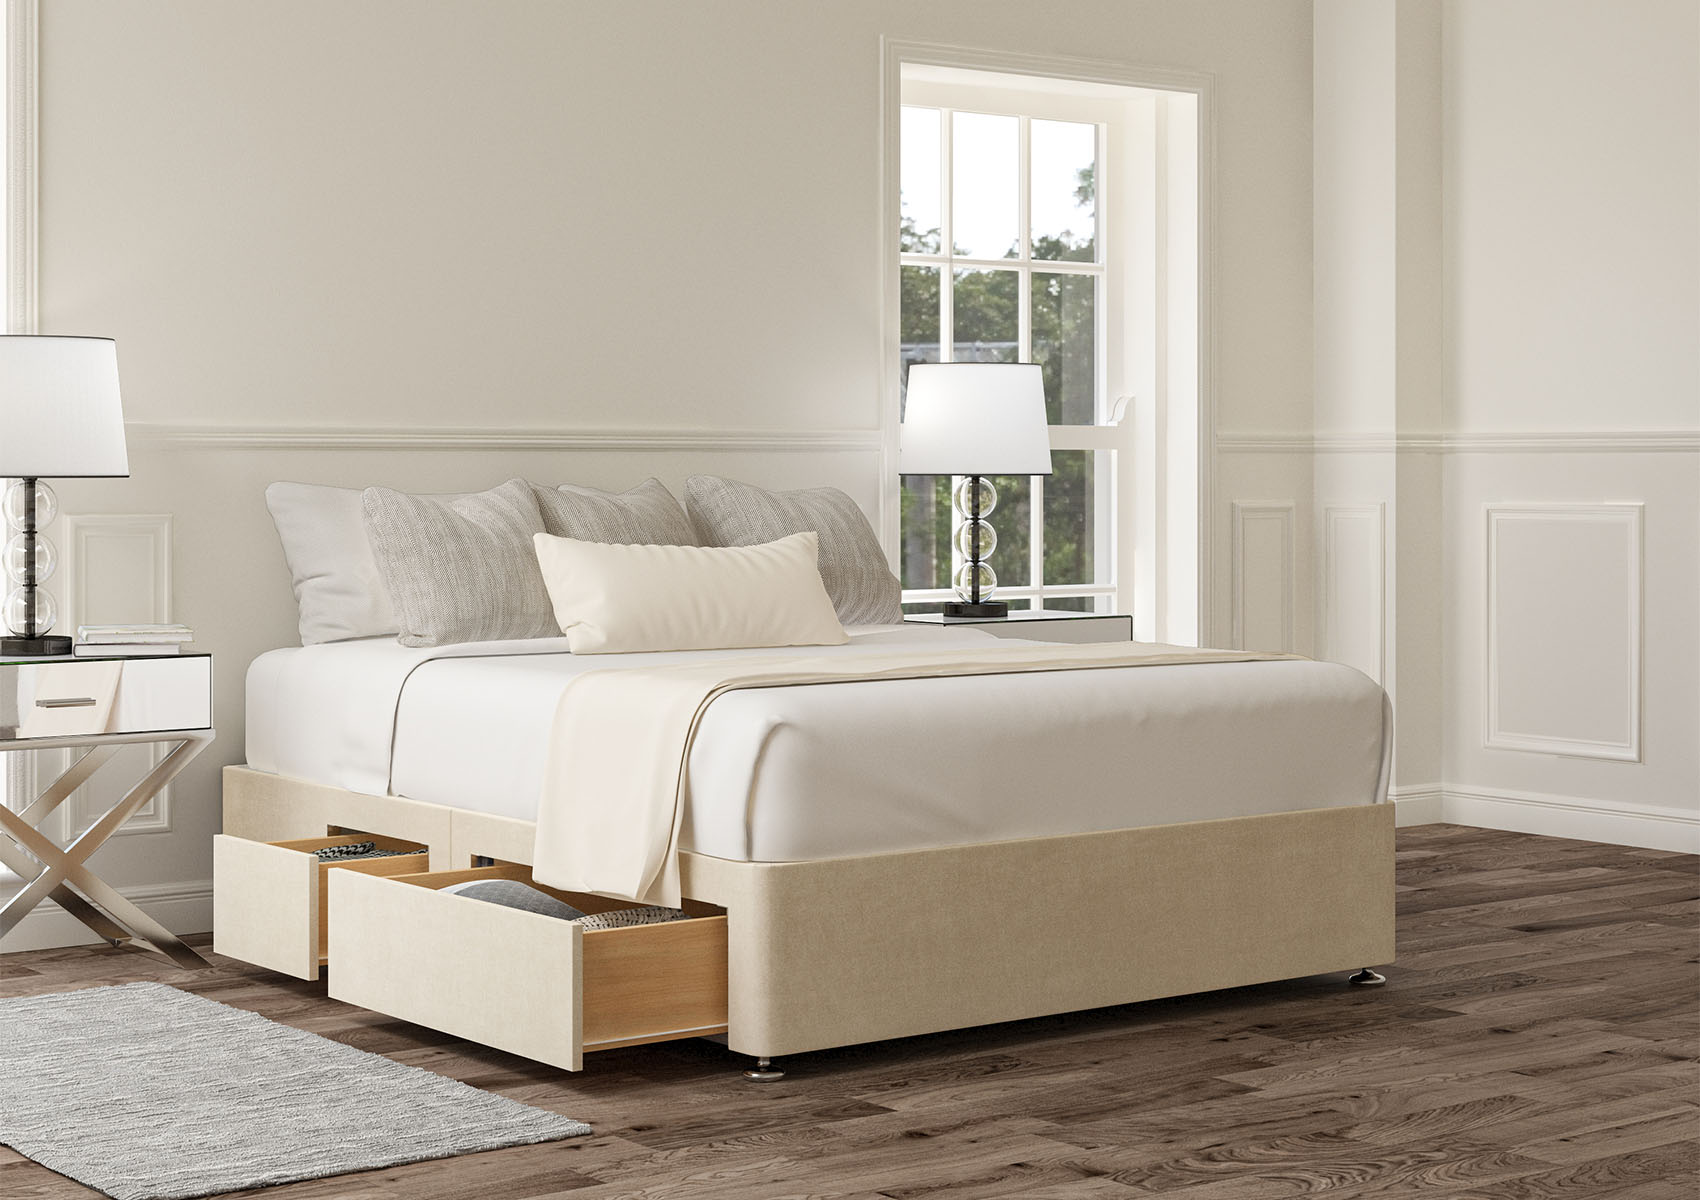 View 22 Plush Mink Upholstered Super King Storage Bed Time4Sleep information